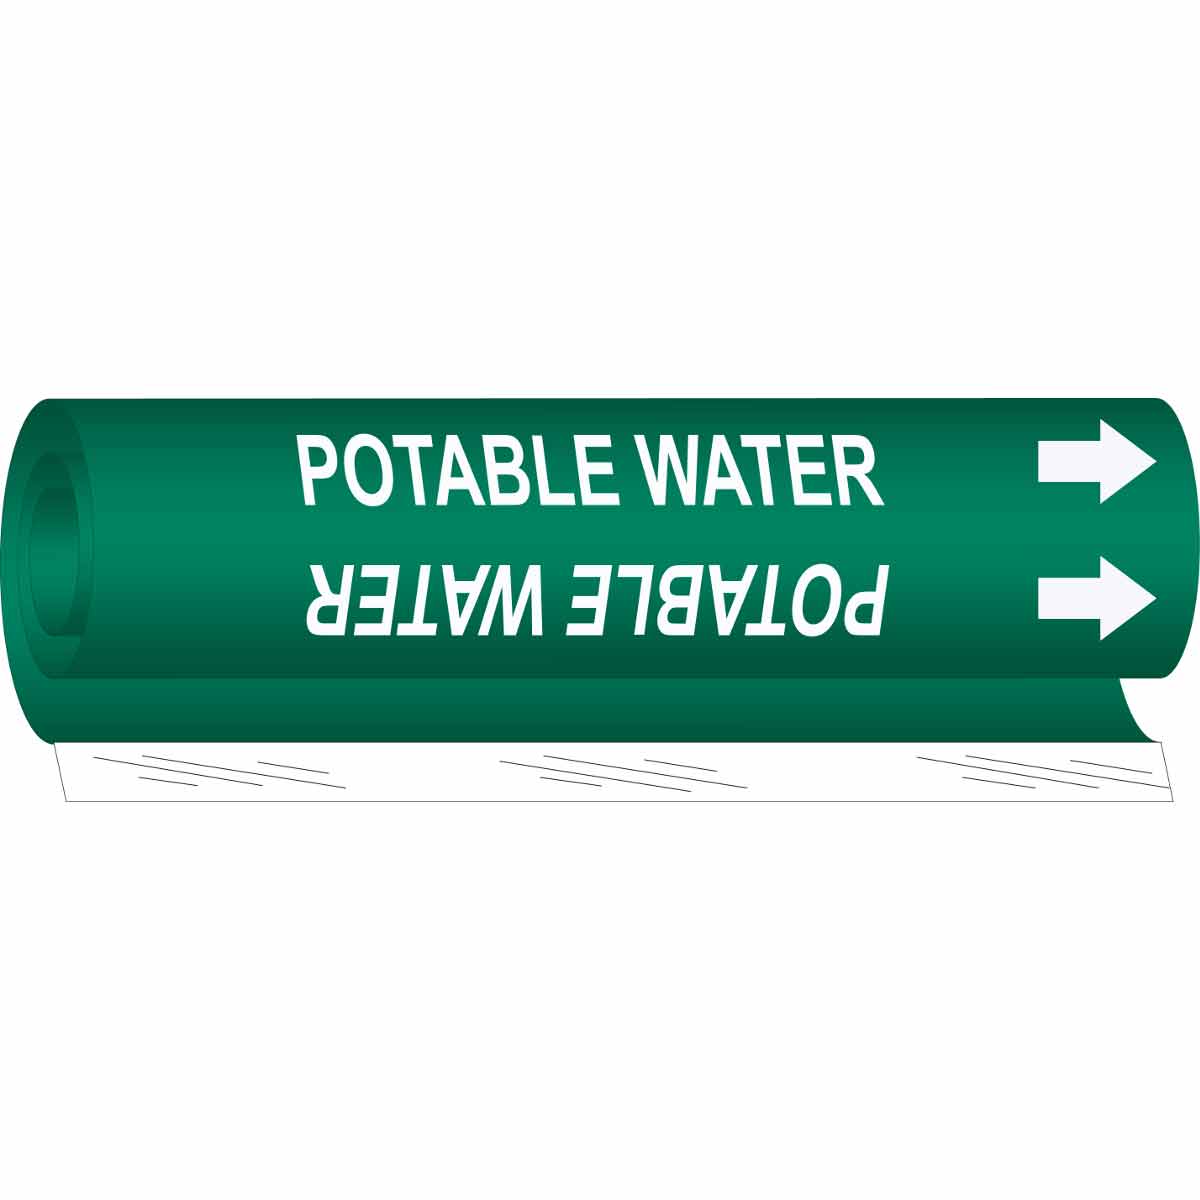 Legend Potable Water Wrap Around Pipe Marker Brady 5744-O High Performance 